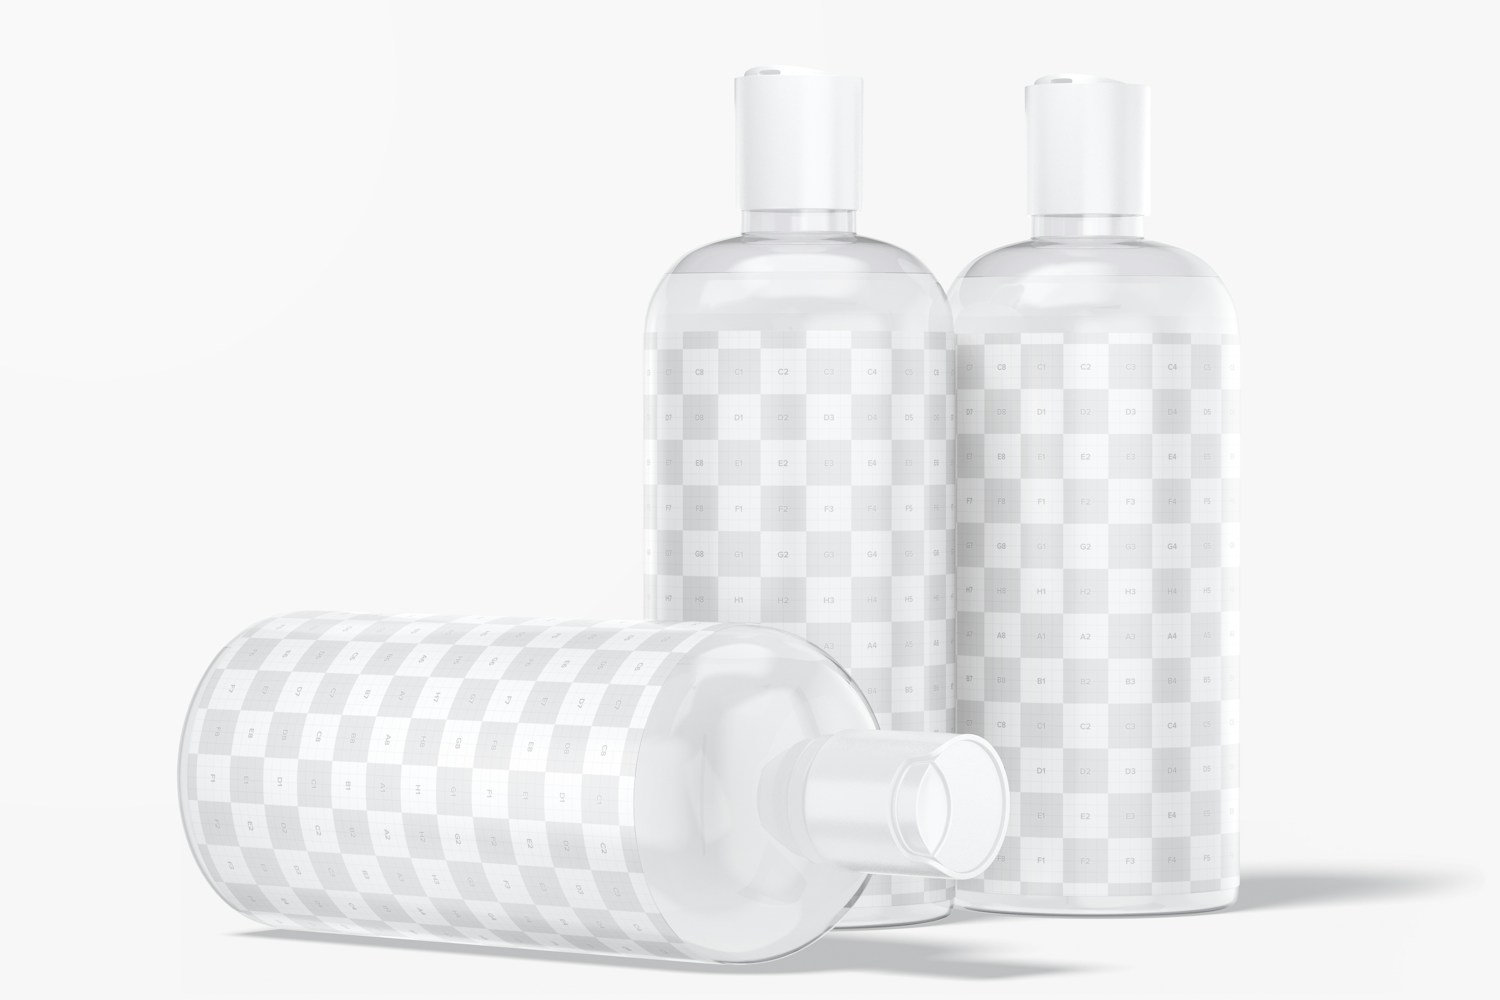 Plastic Body Wash Bottles Mockup